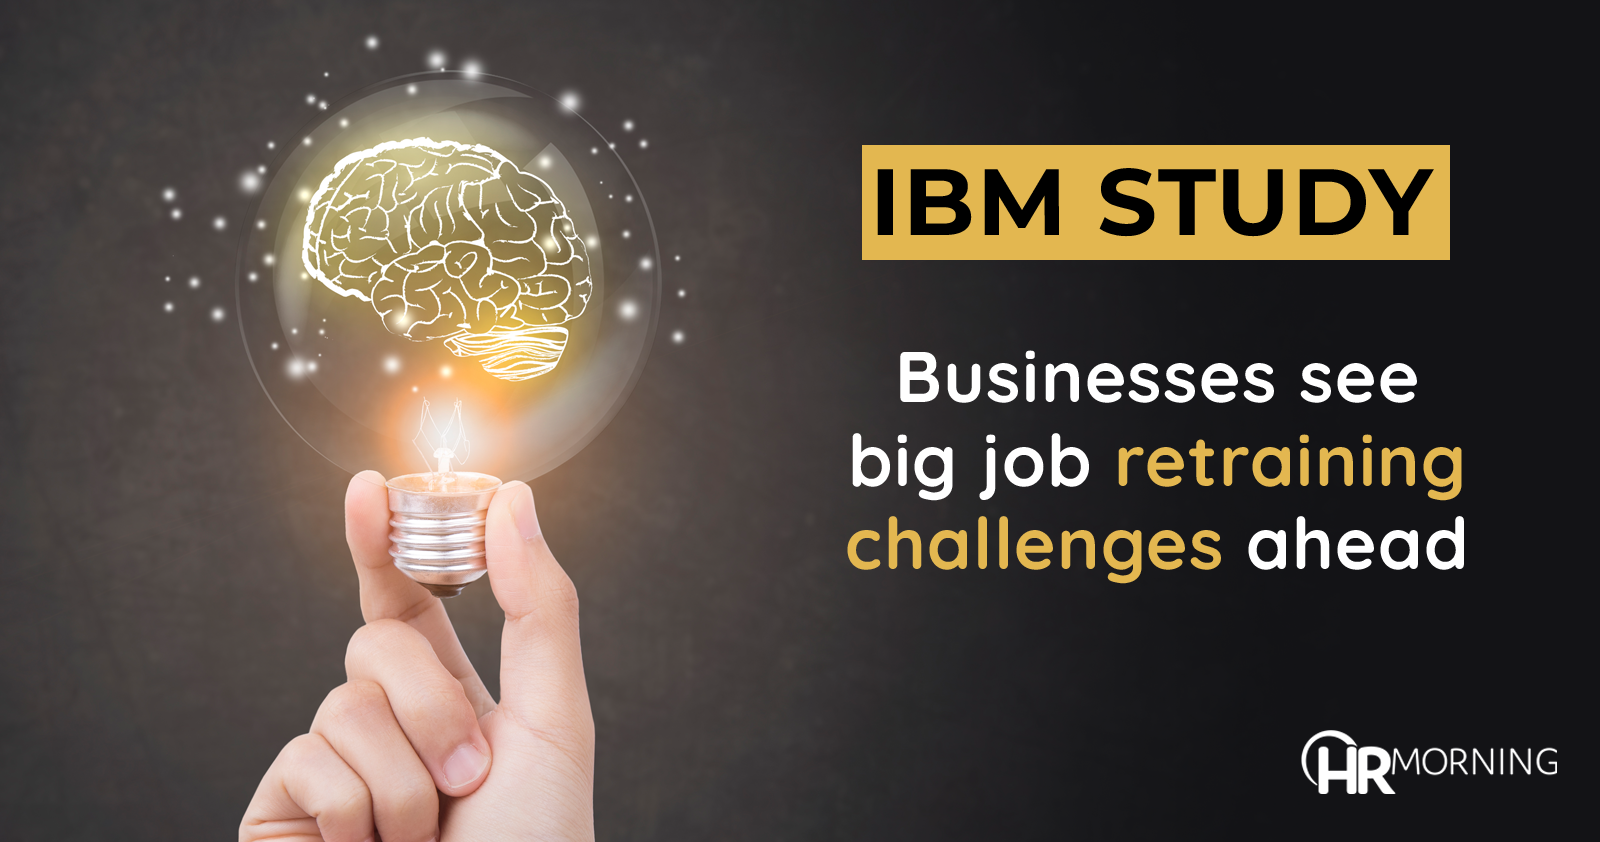 IBM study: Businesses see big job retraining challenges ahead